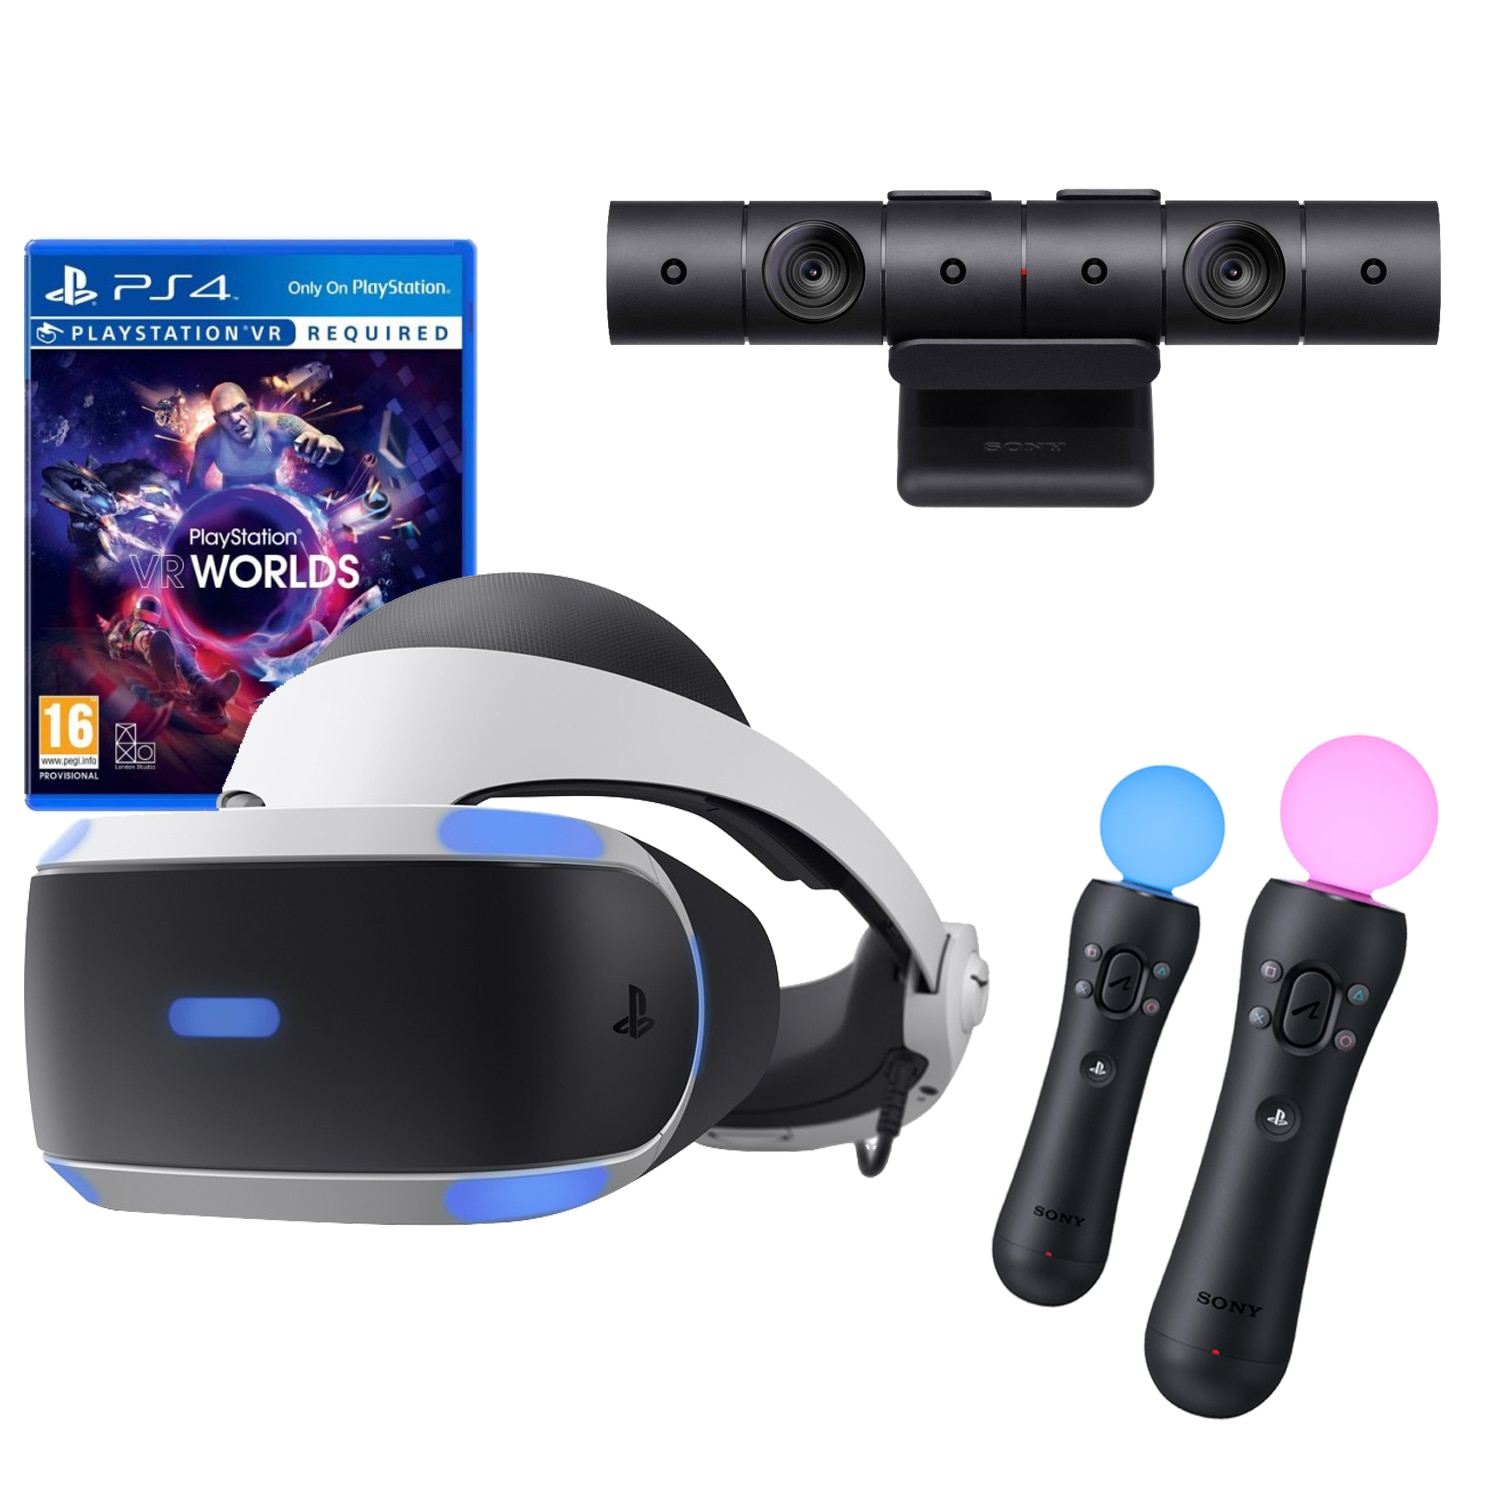 Sony PlayStation 4 5 PS4 VR v2 Virtual Reality Headset with Camera